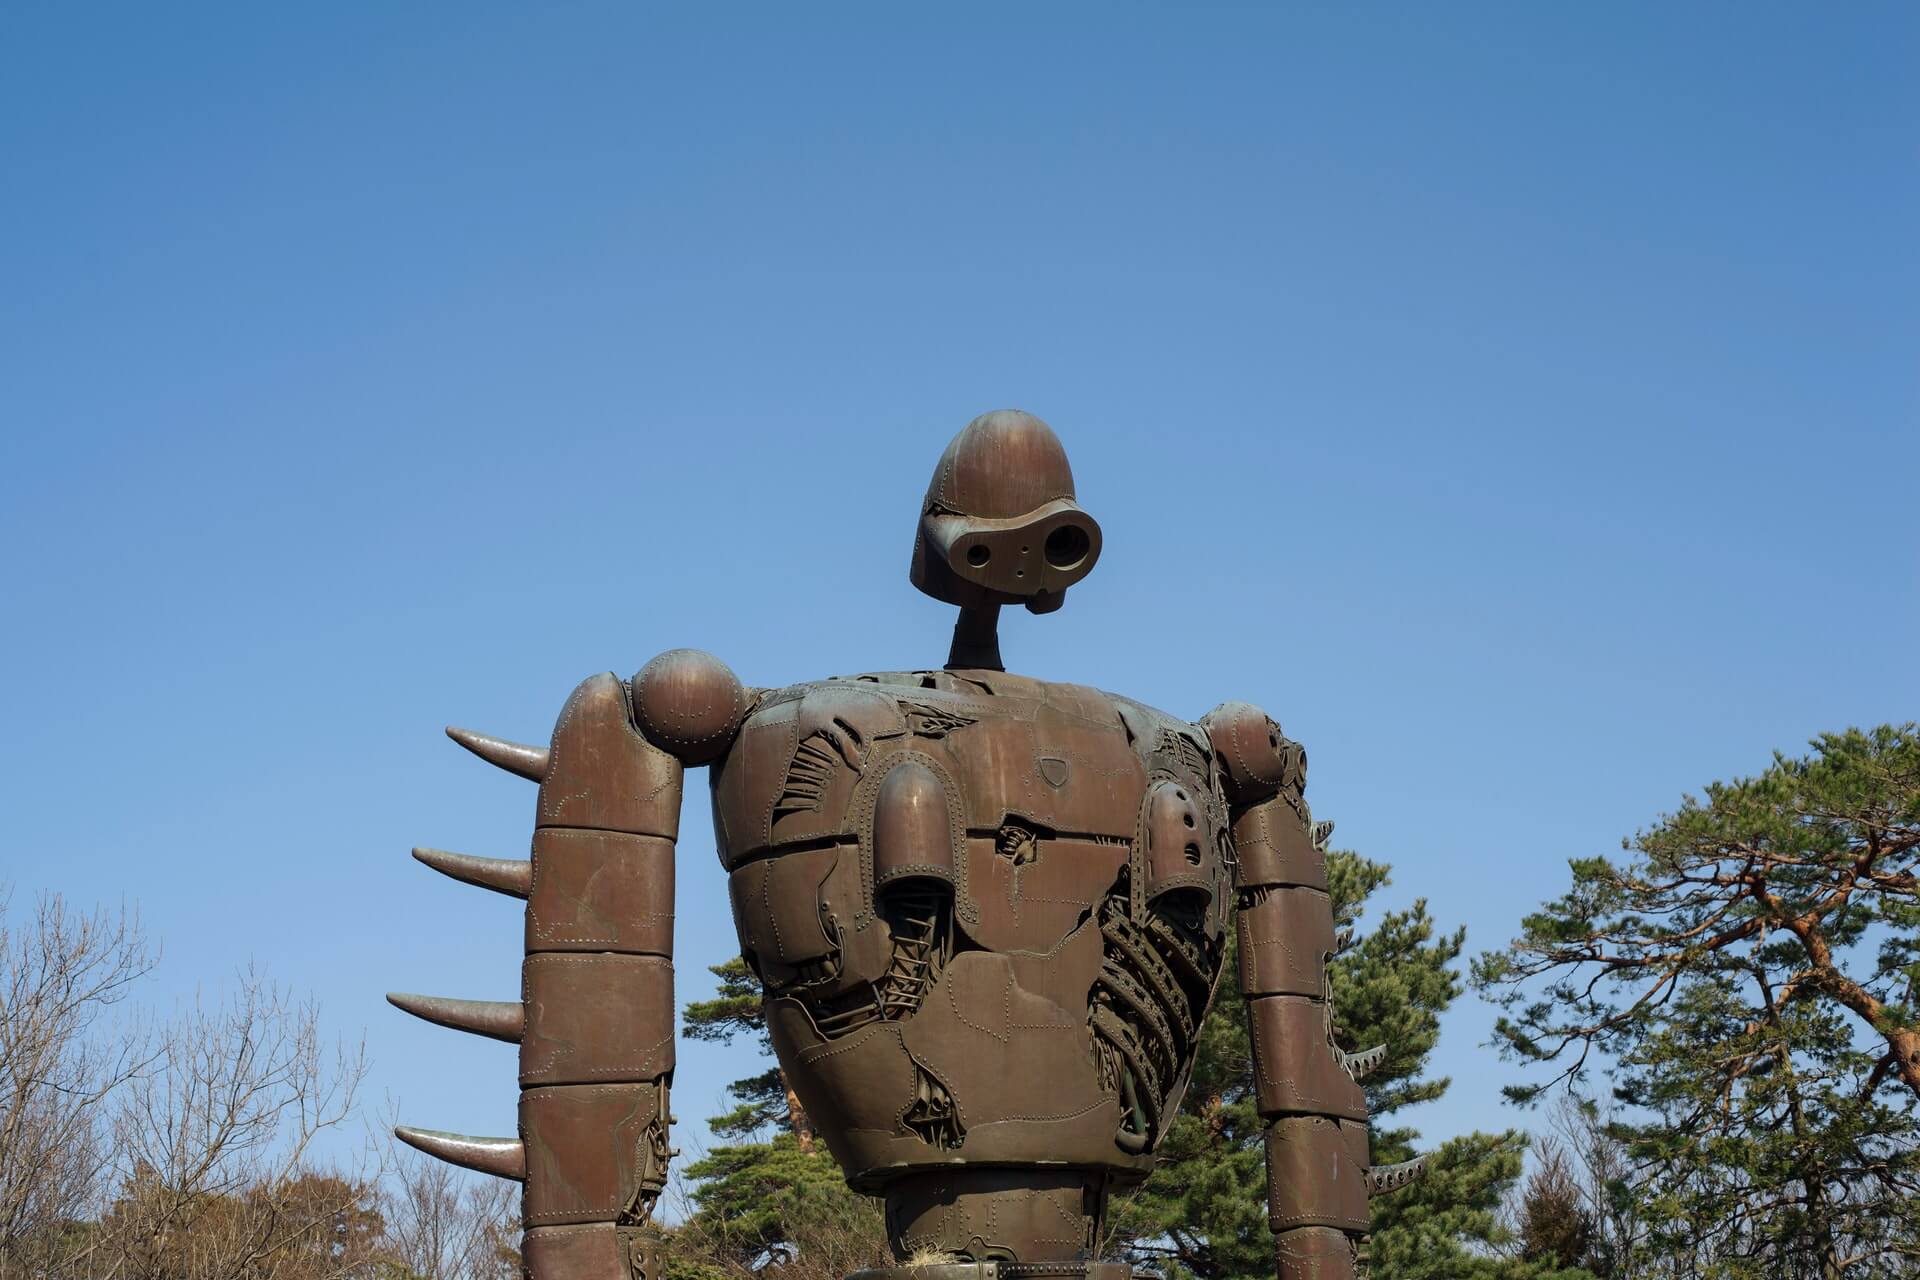 Laputian Robot from Castle in the Sky by Hayao Miyazaki at Studio Ghibli Museum